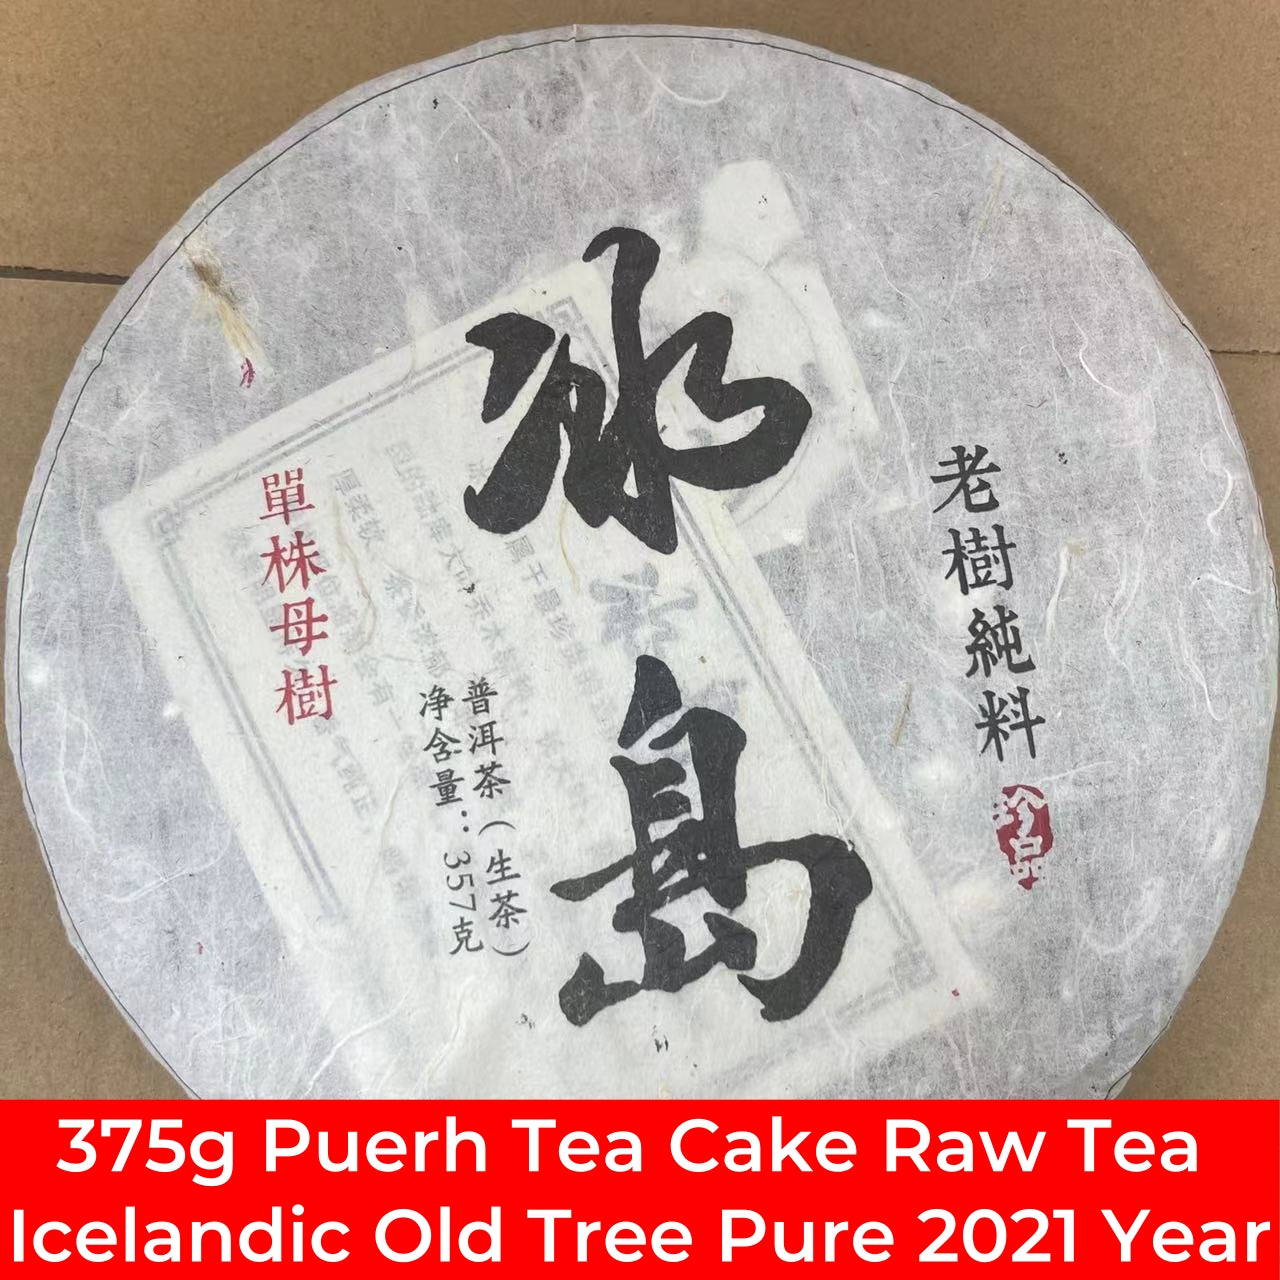 Pu-erh Tea Yunnan Pu'er Tea Cake Raw Tea Ripe Tea 375g Yiwu Ancient Trees Iceland Old Banzhang Tea